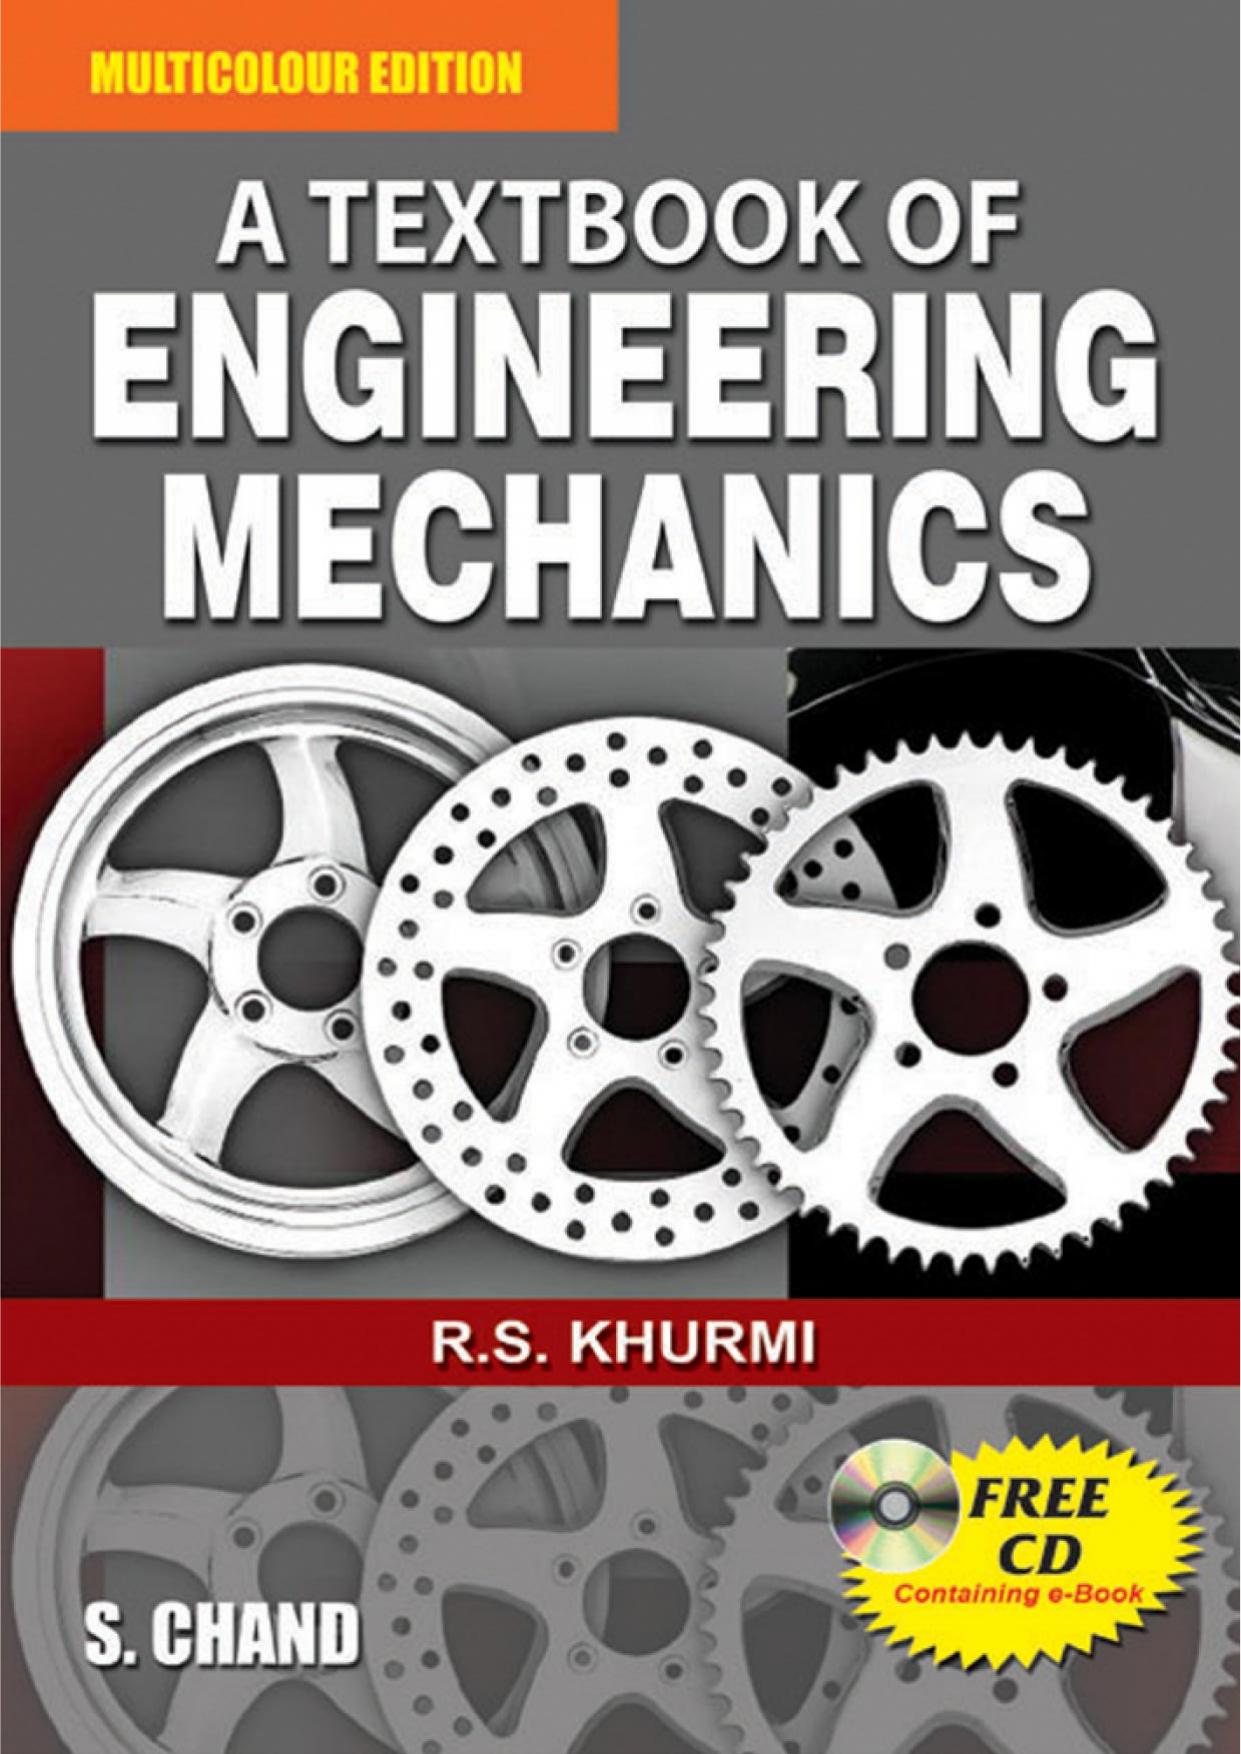 Engineering Mechanics by R.S Khurmi